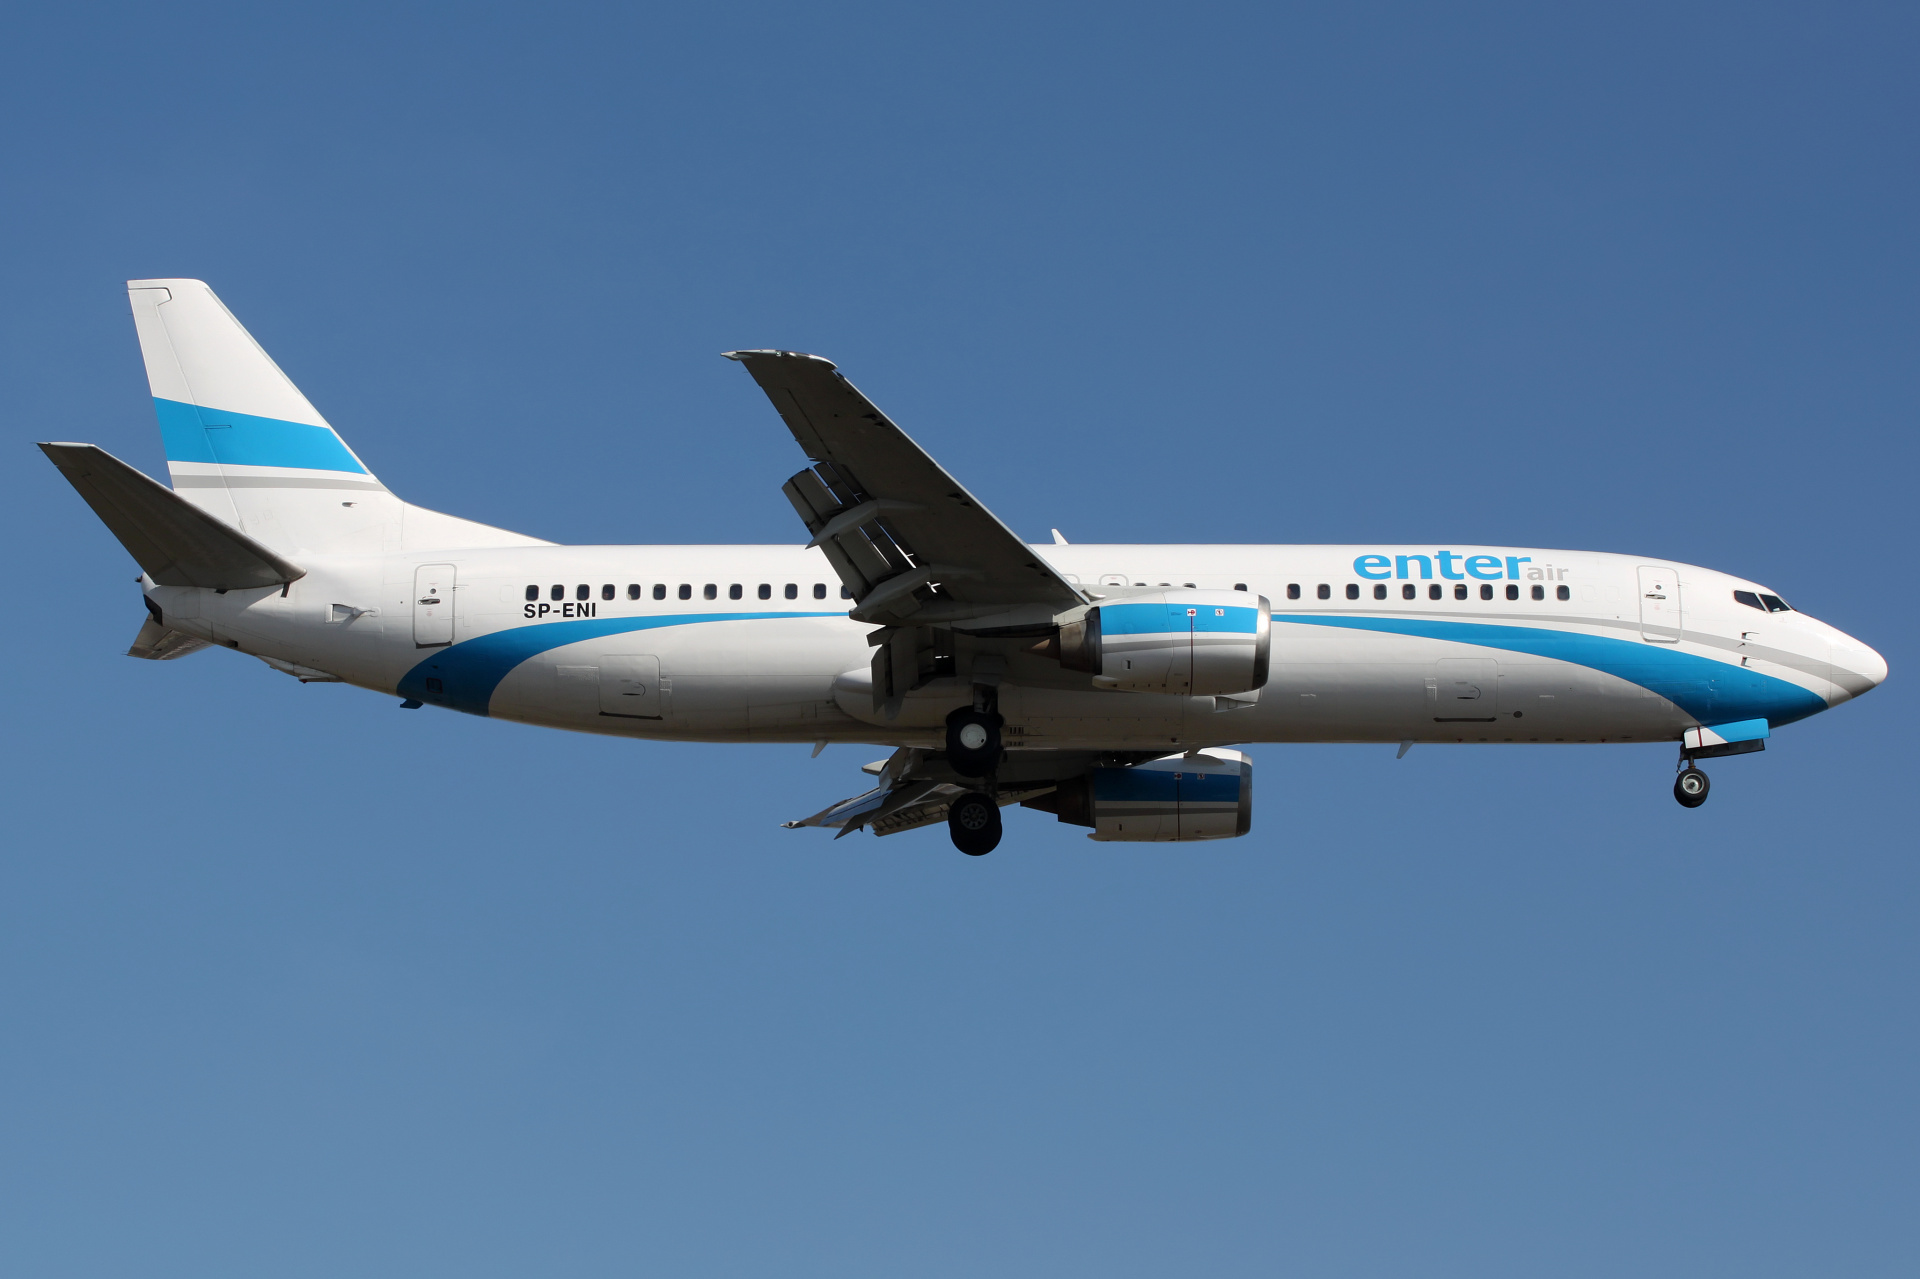 SP-ENI (Aircraft » EPWA Spotting » Boeing 737-400 » Enter Air)